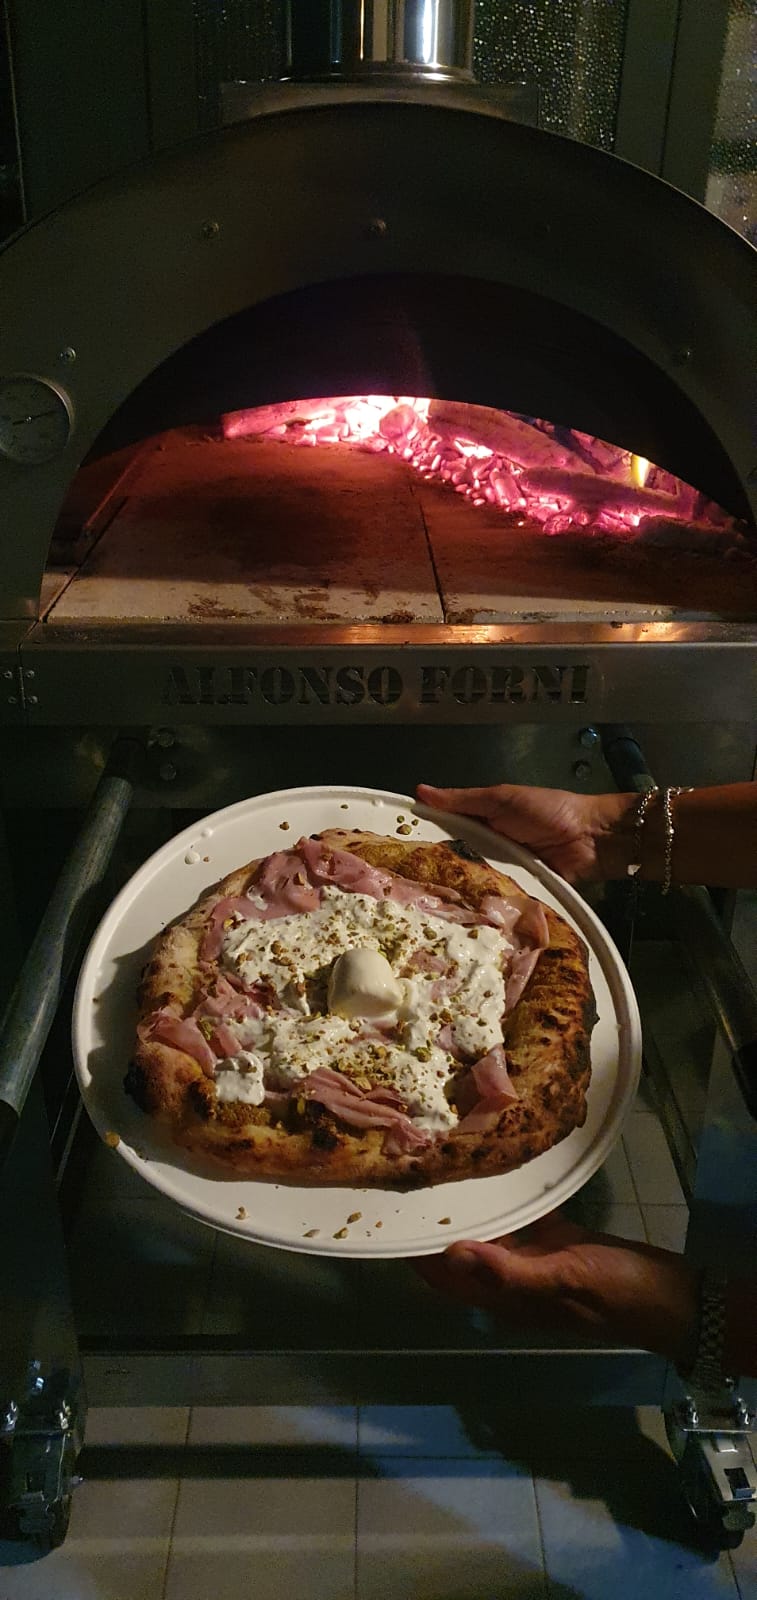 alfonso 6 pizze ibrido, piano cottura